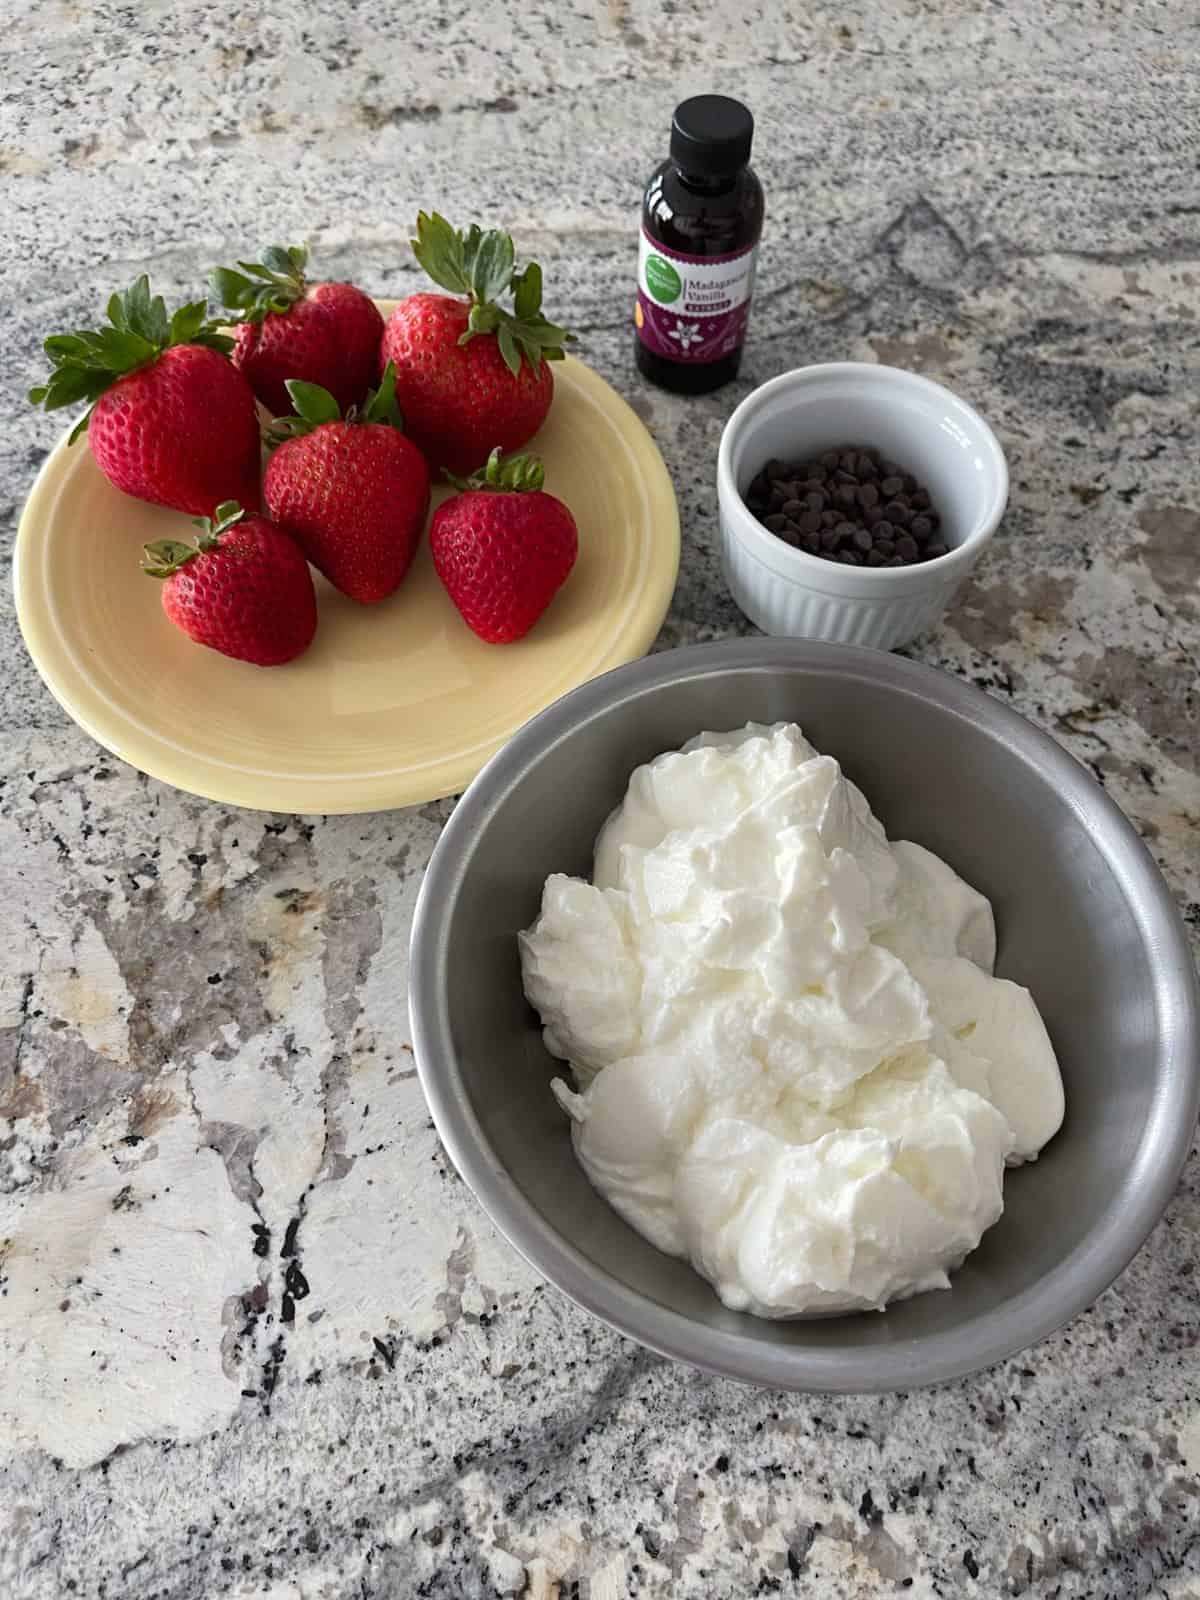 Ingredients for making frozen yogurt bark - including fresh strawberries, Greek yogurt, mini chocolate chips and vanilla extract.